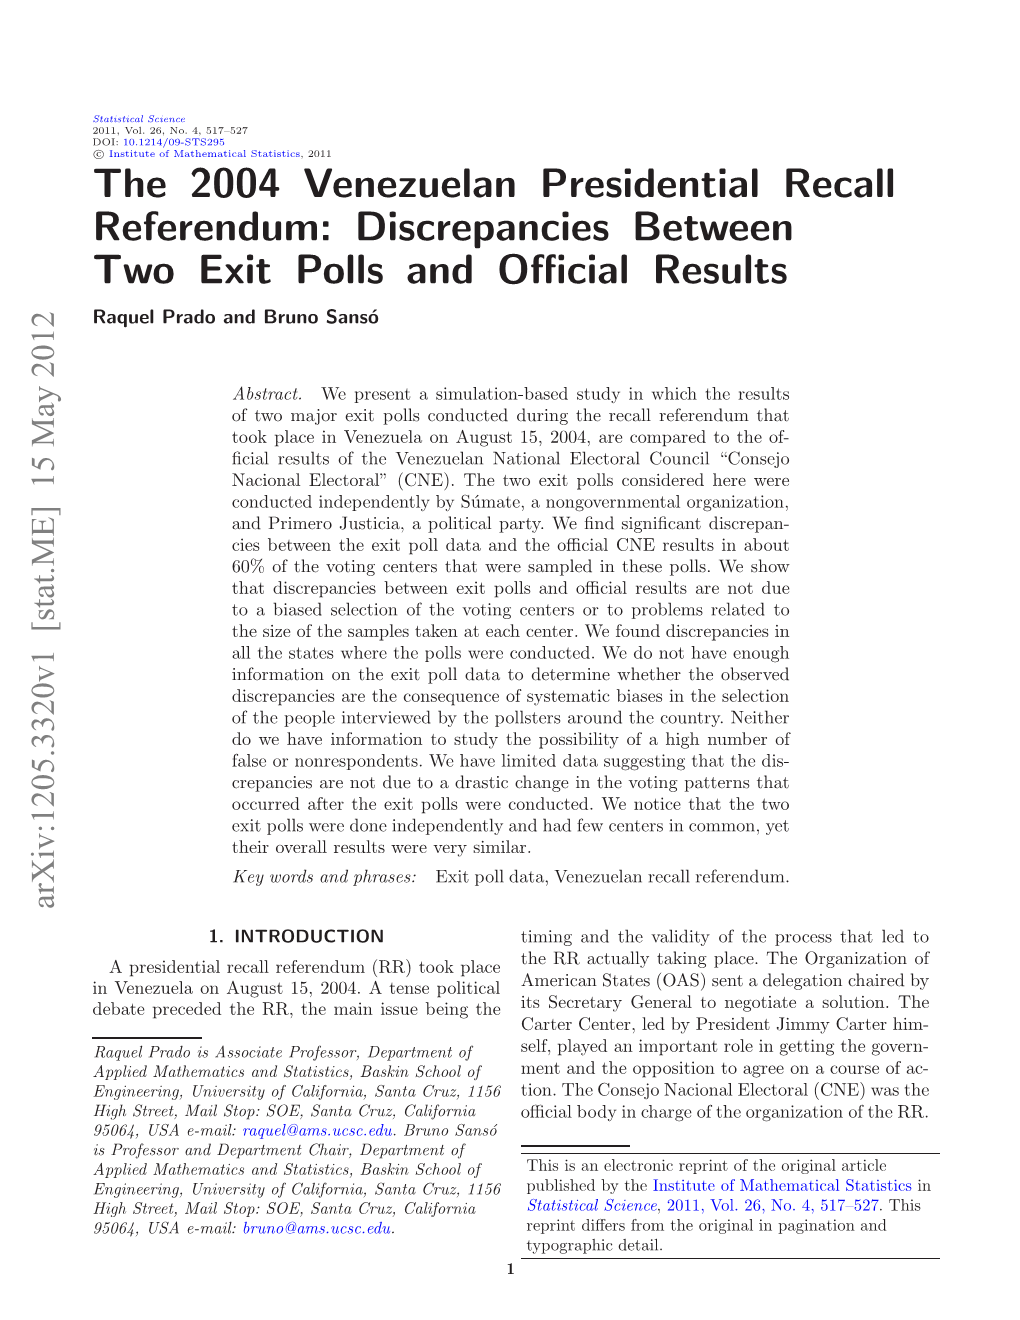 The 2004 Venezuelan Presidential Recall Referendum